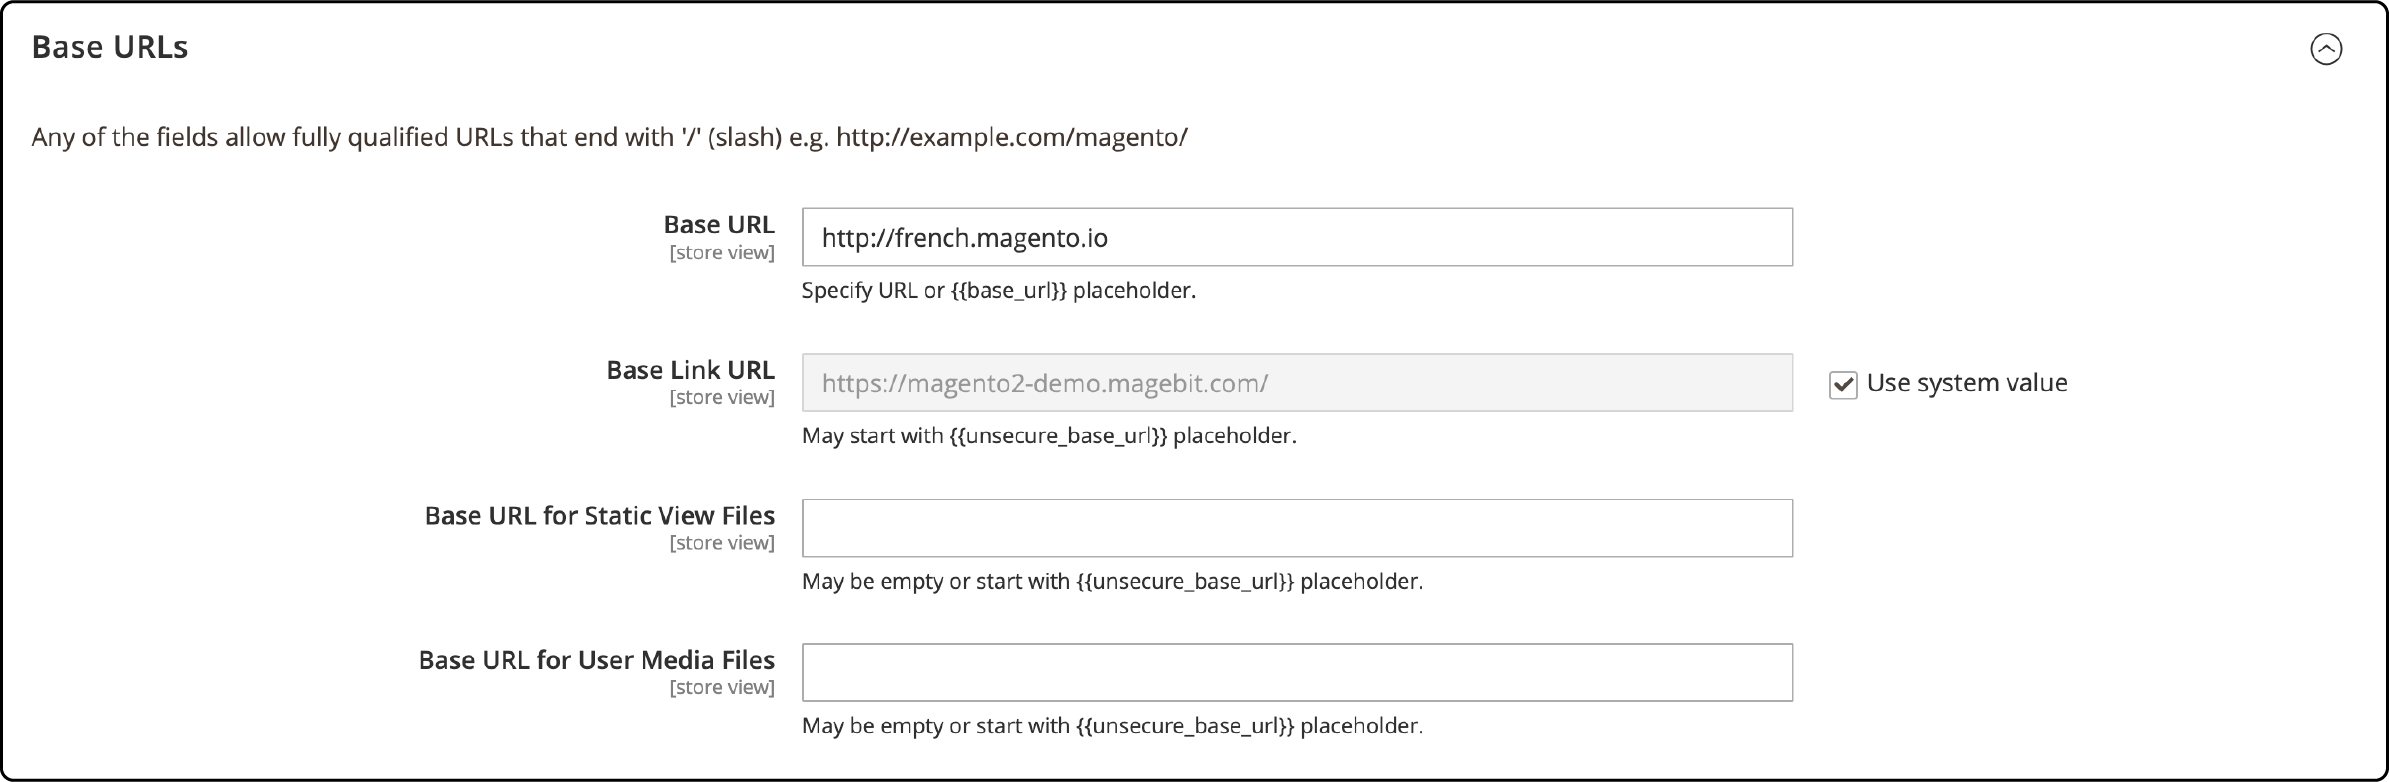 Step 4 in Magento Multi-Store Setup: Creating a Custom URL